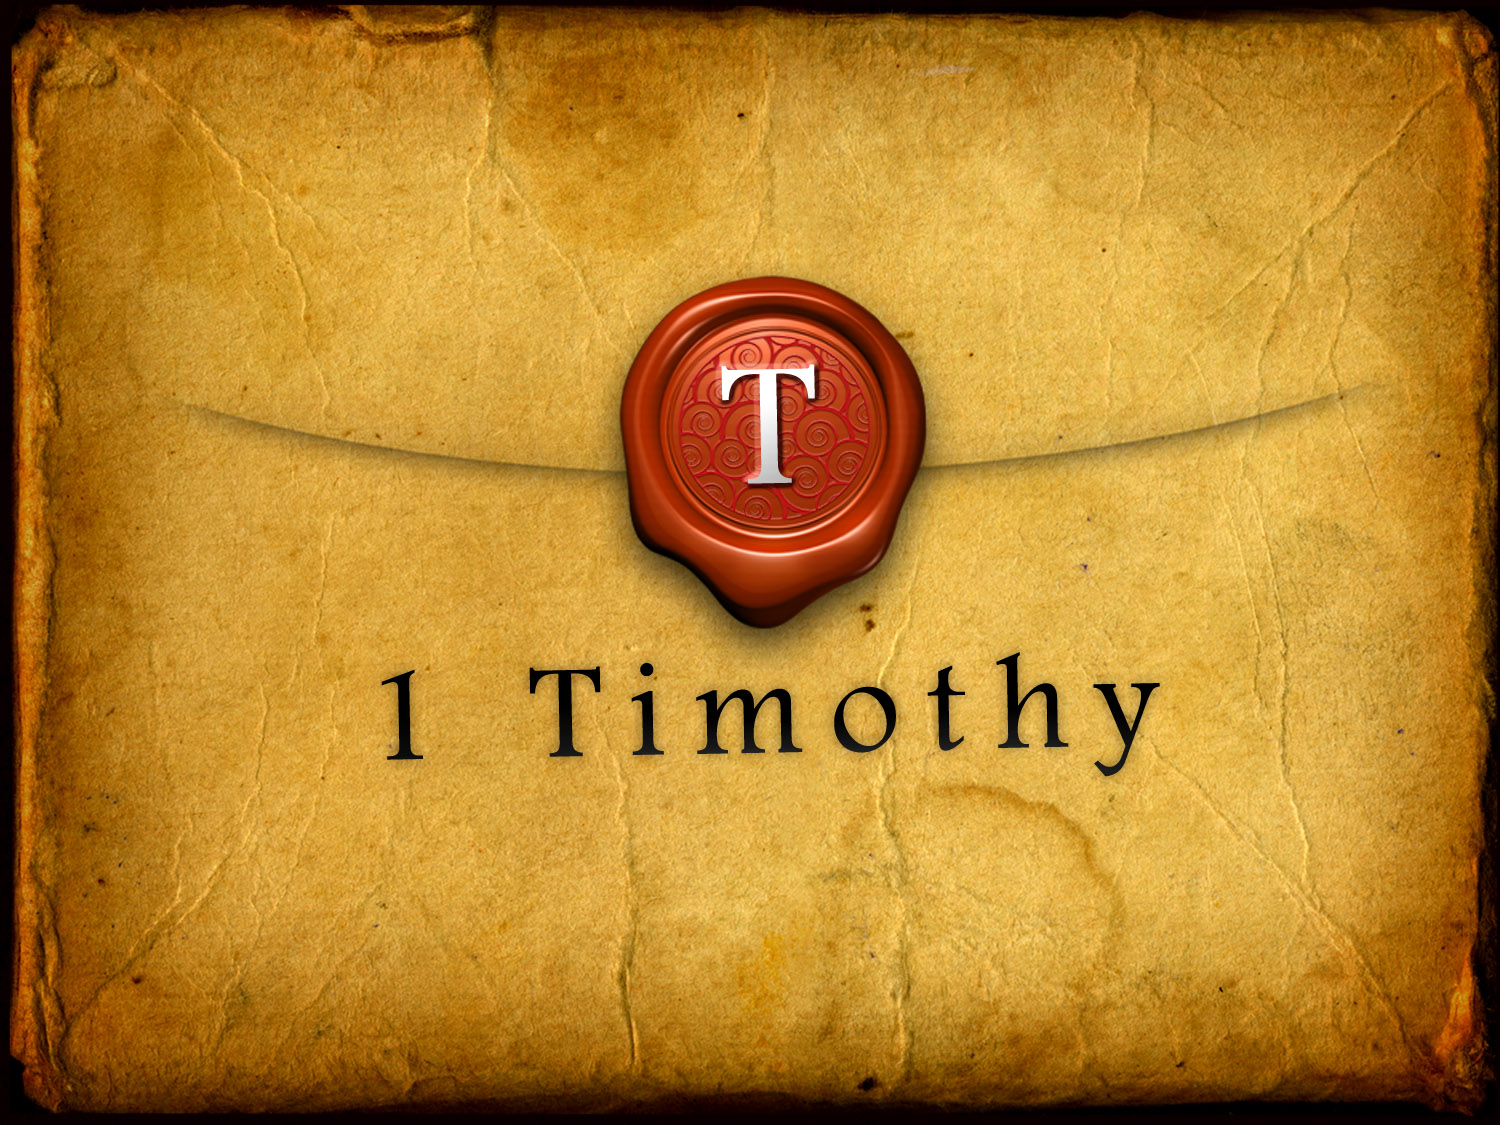 1 Timothy 4:1-16